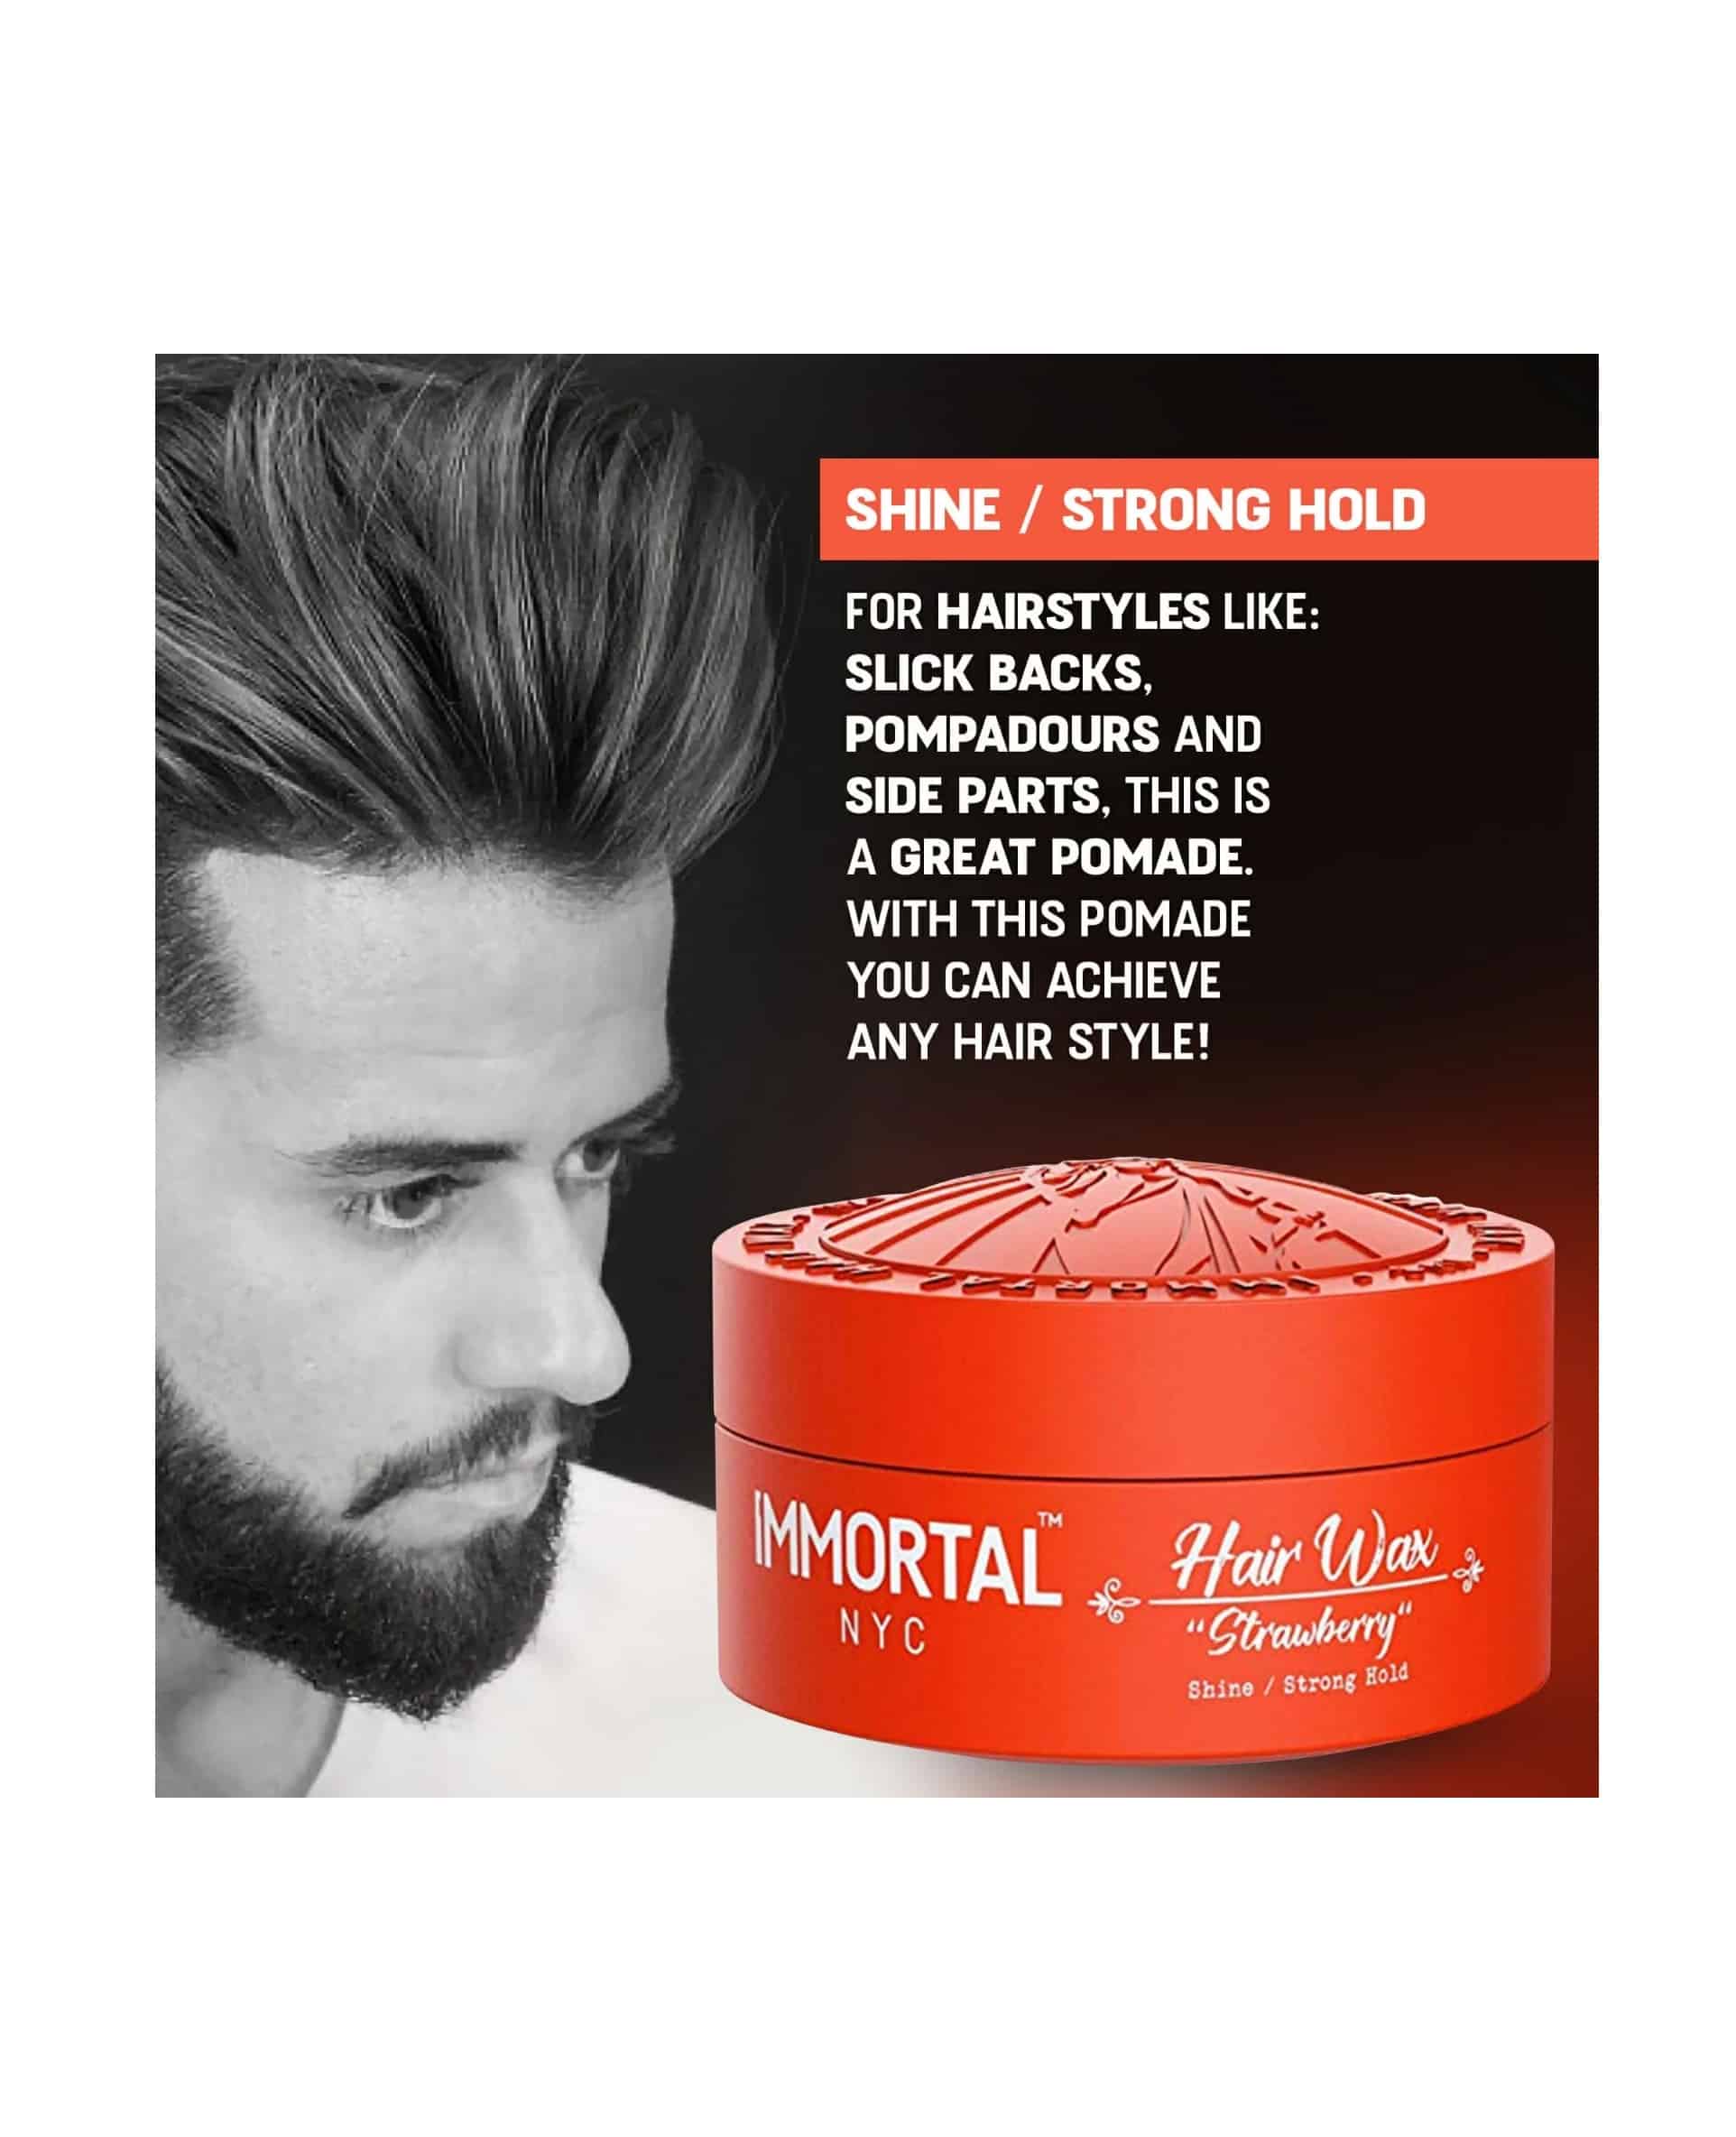 Immortal NYC Strawberry Hair Wax Info